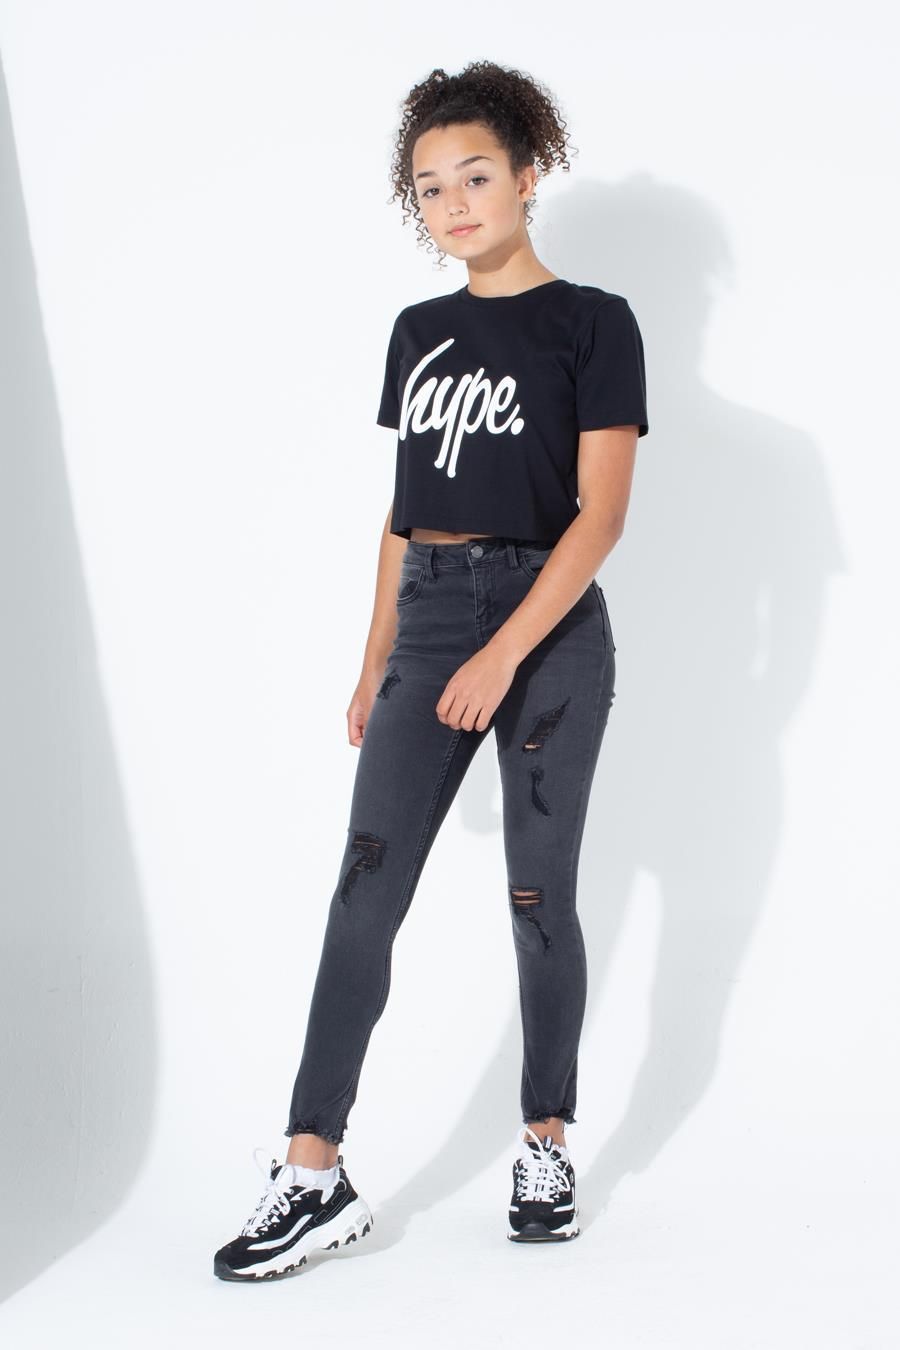 Hype Black White Script Kids Crop T-Shirt